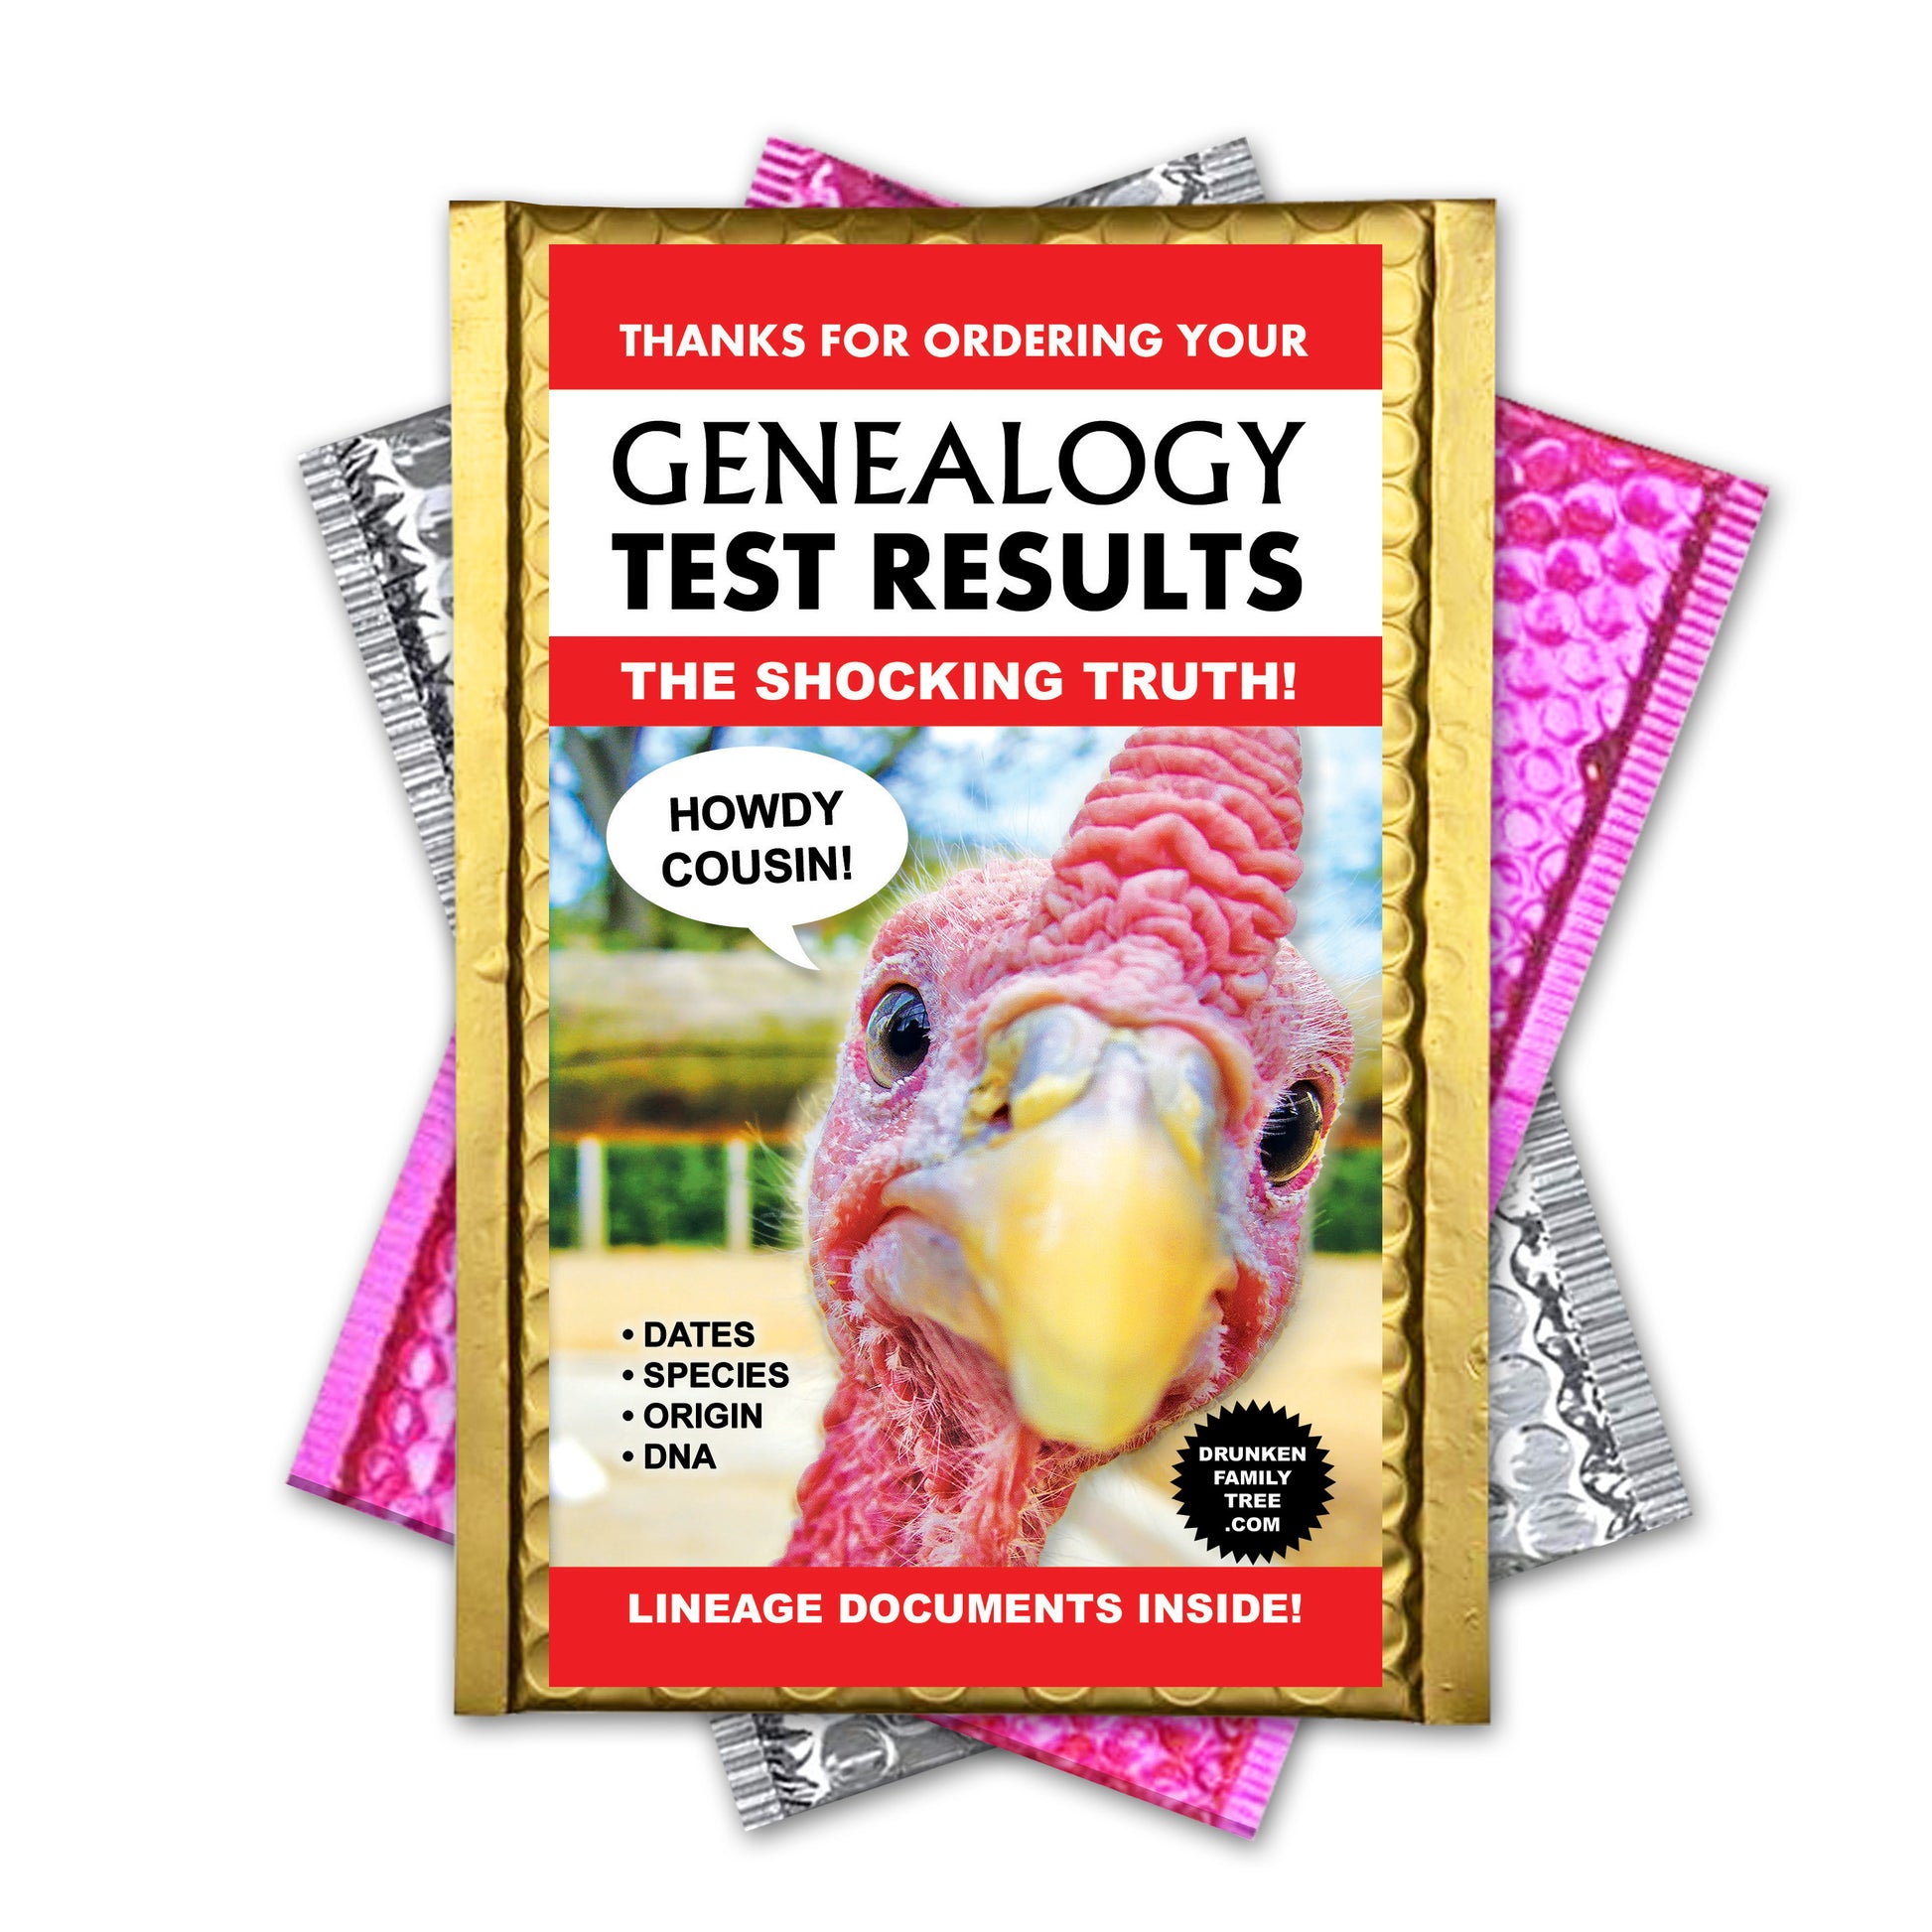 Genealogy Test Results Gag Gift Mail Prank